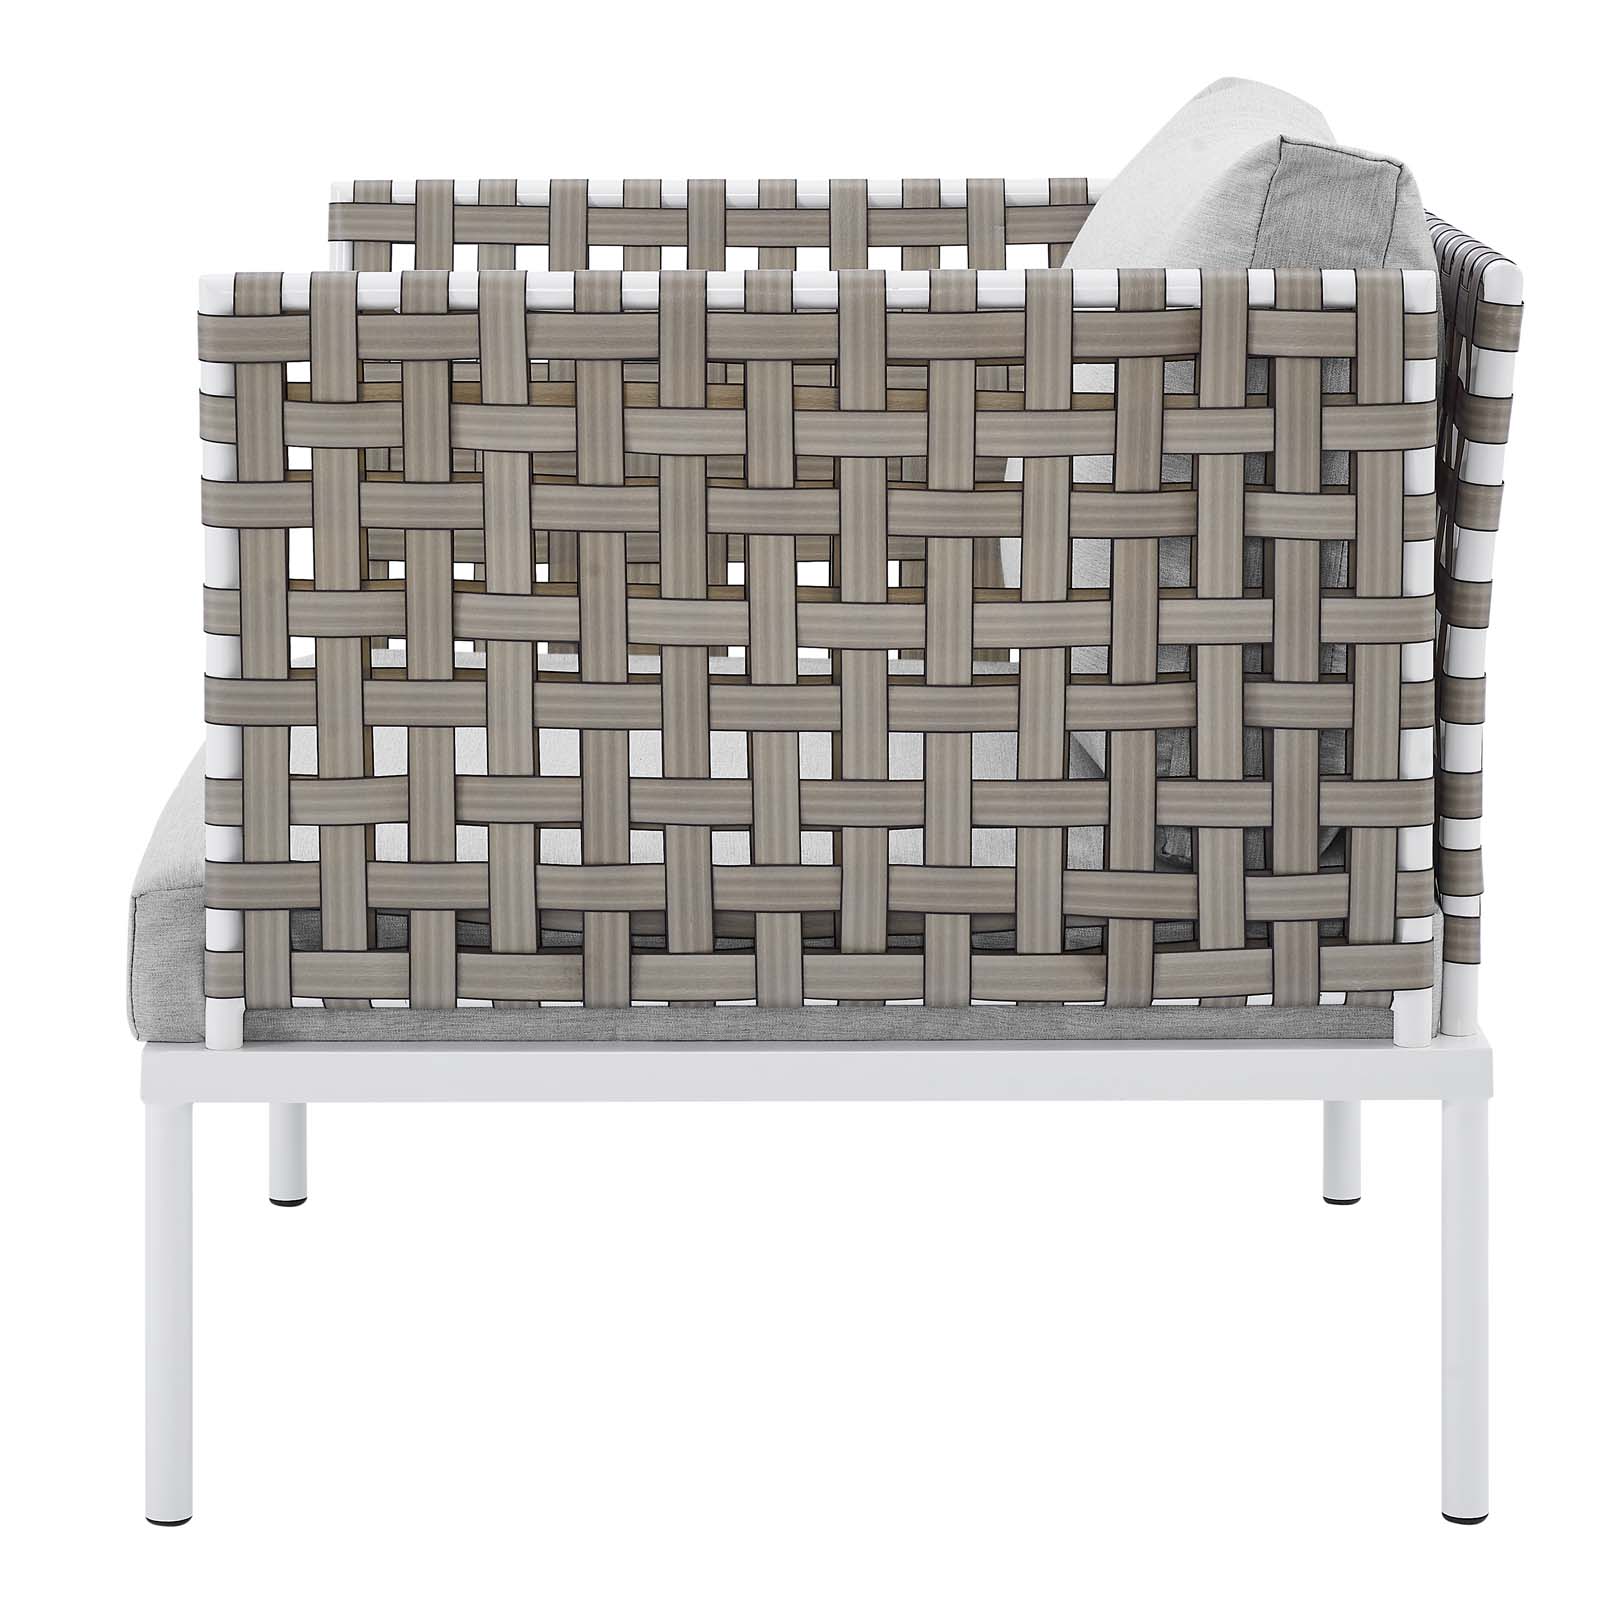 Side Lounge Chair Armchair, Sunbrella, Aluminum, Metal, Steel, Grey Gray, Modern Contemporary Urban Design, Outdoor Patio Balcony Cafe Bistro Garden Furniture Hotel Hospitality - image 4 of 8